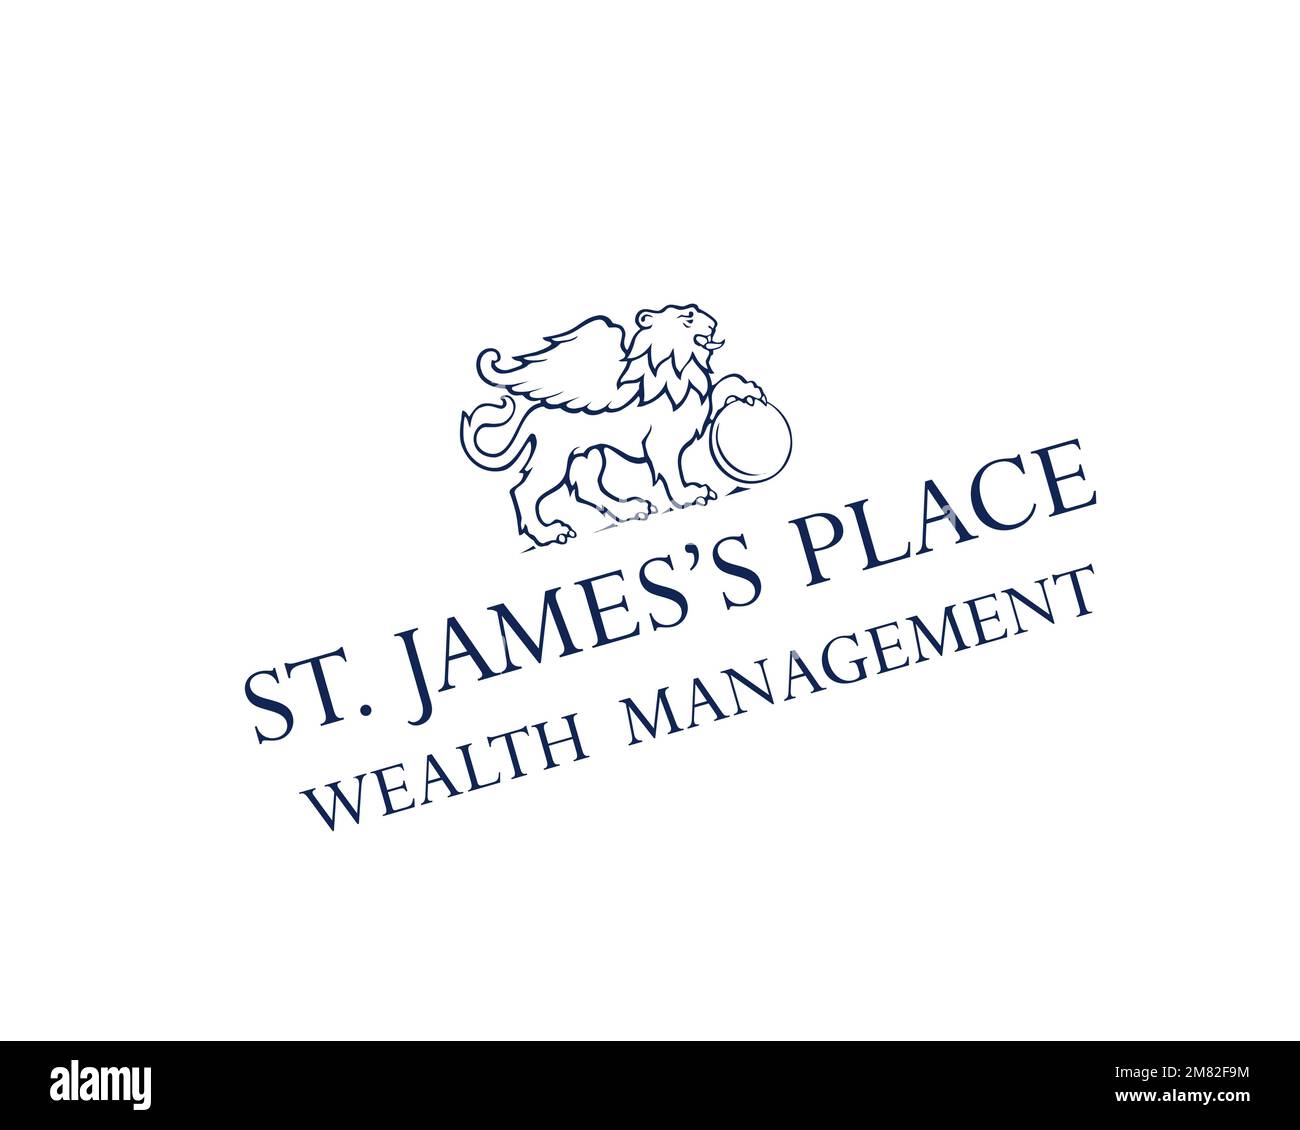 St James's Place plc, logo ruotato, sfondo bianco Foto Stock